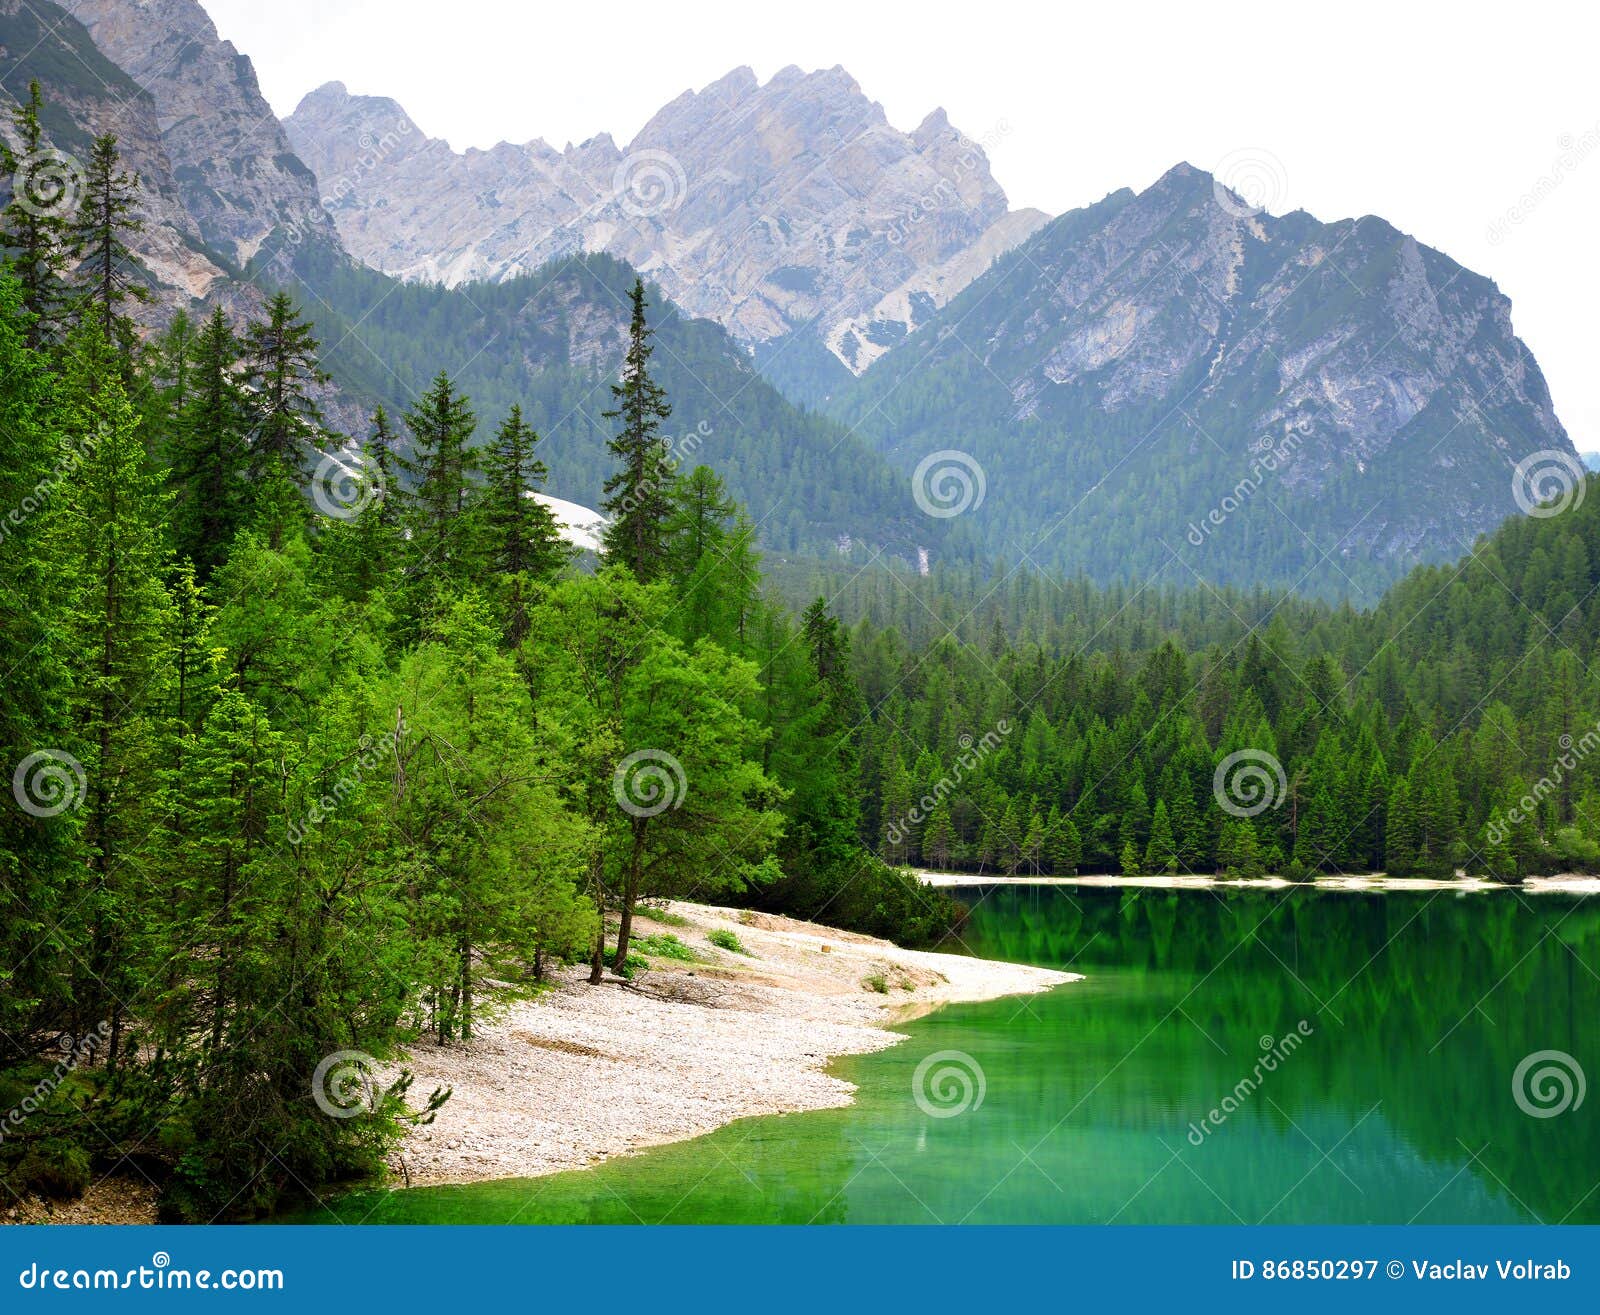 lago di braies pragser wildsee in dolomites mountains